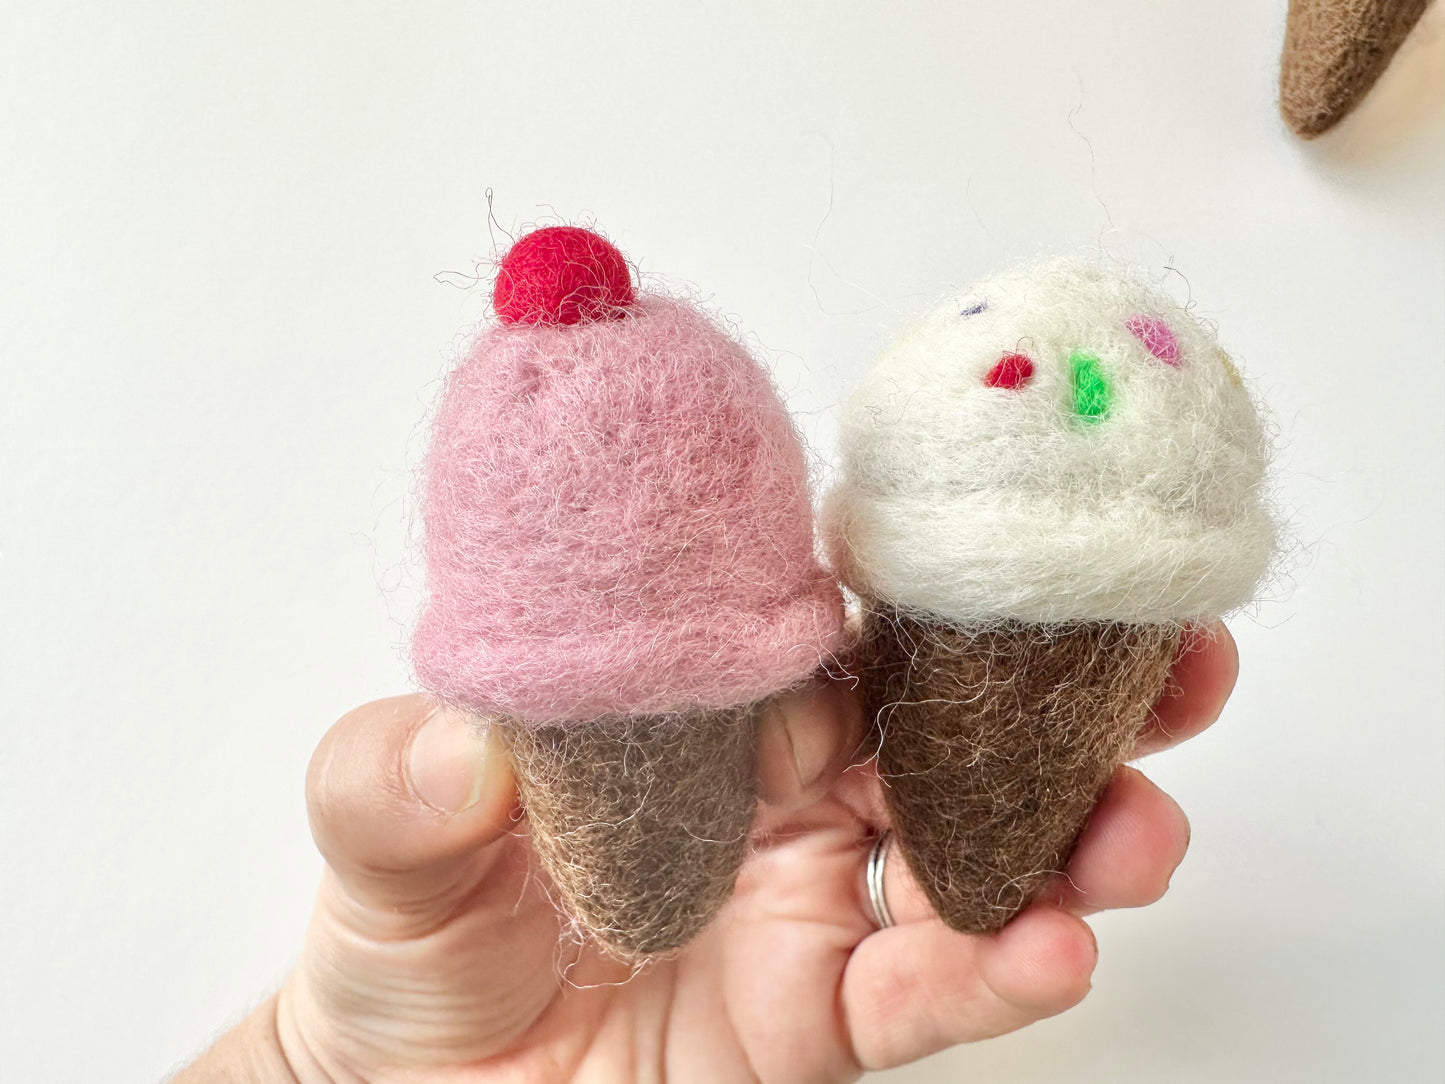 Ice Cream or Lollipop Ornament